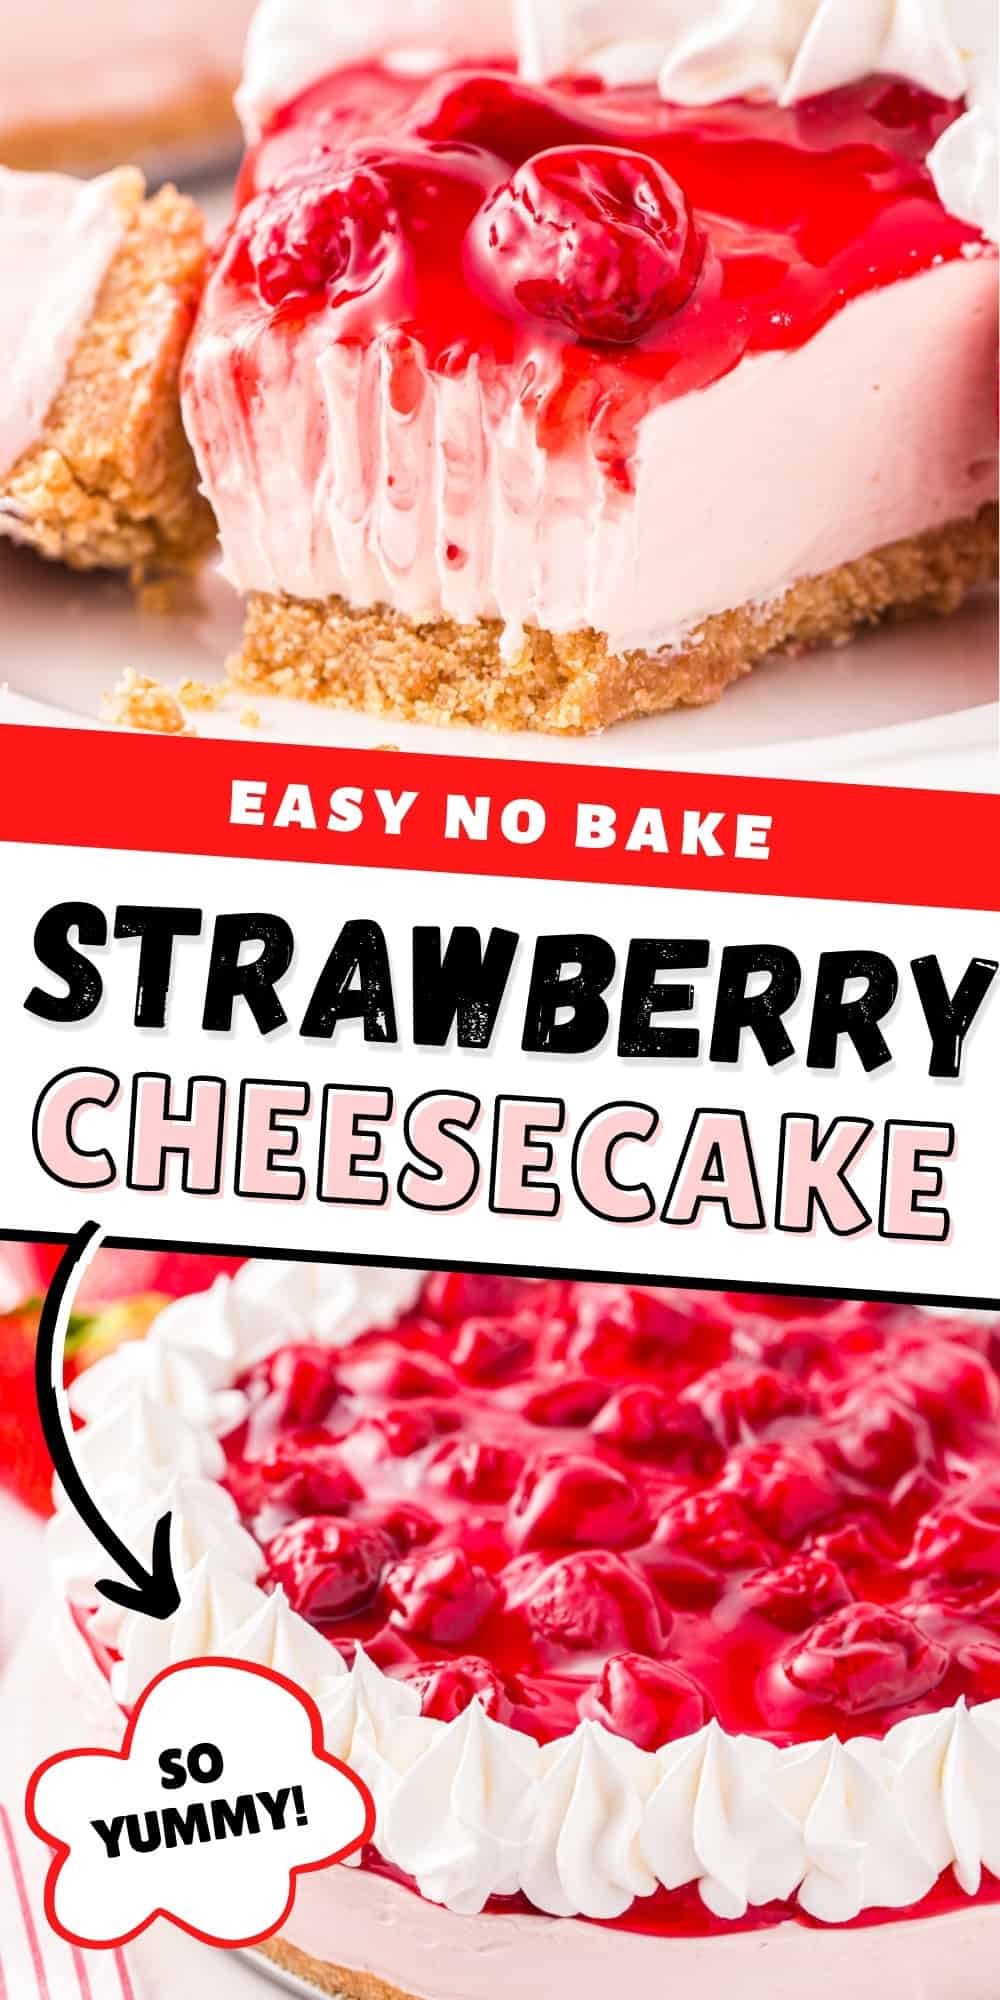 Easy no bake strawberry cheesecake: so yummy! 